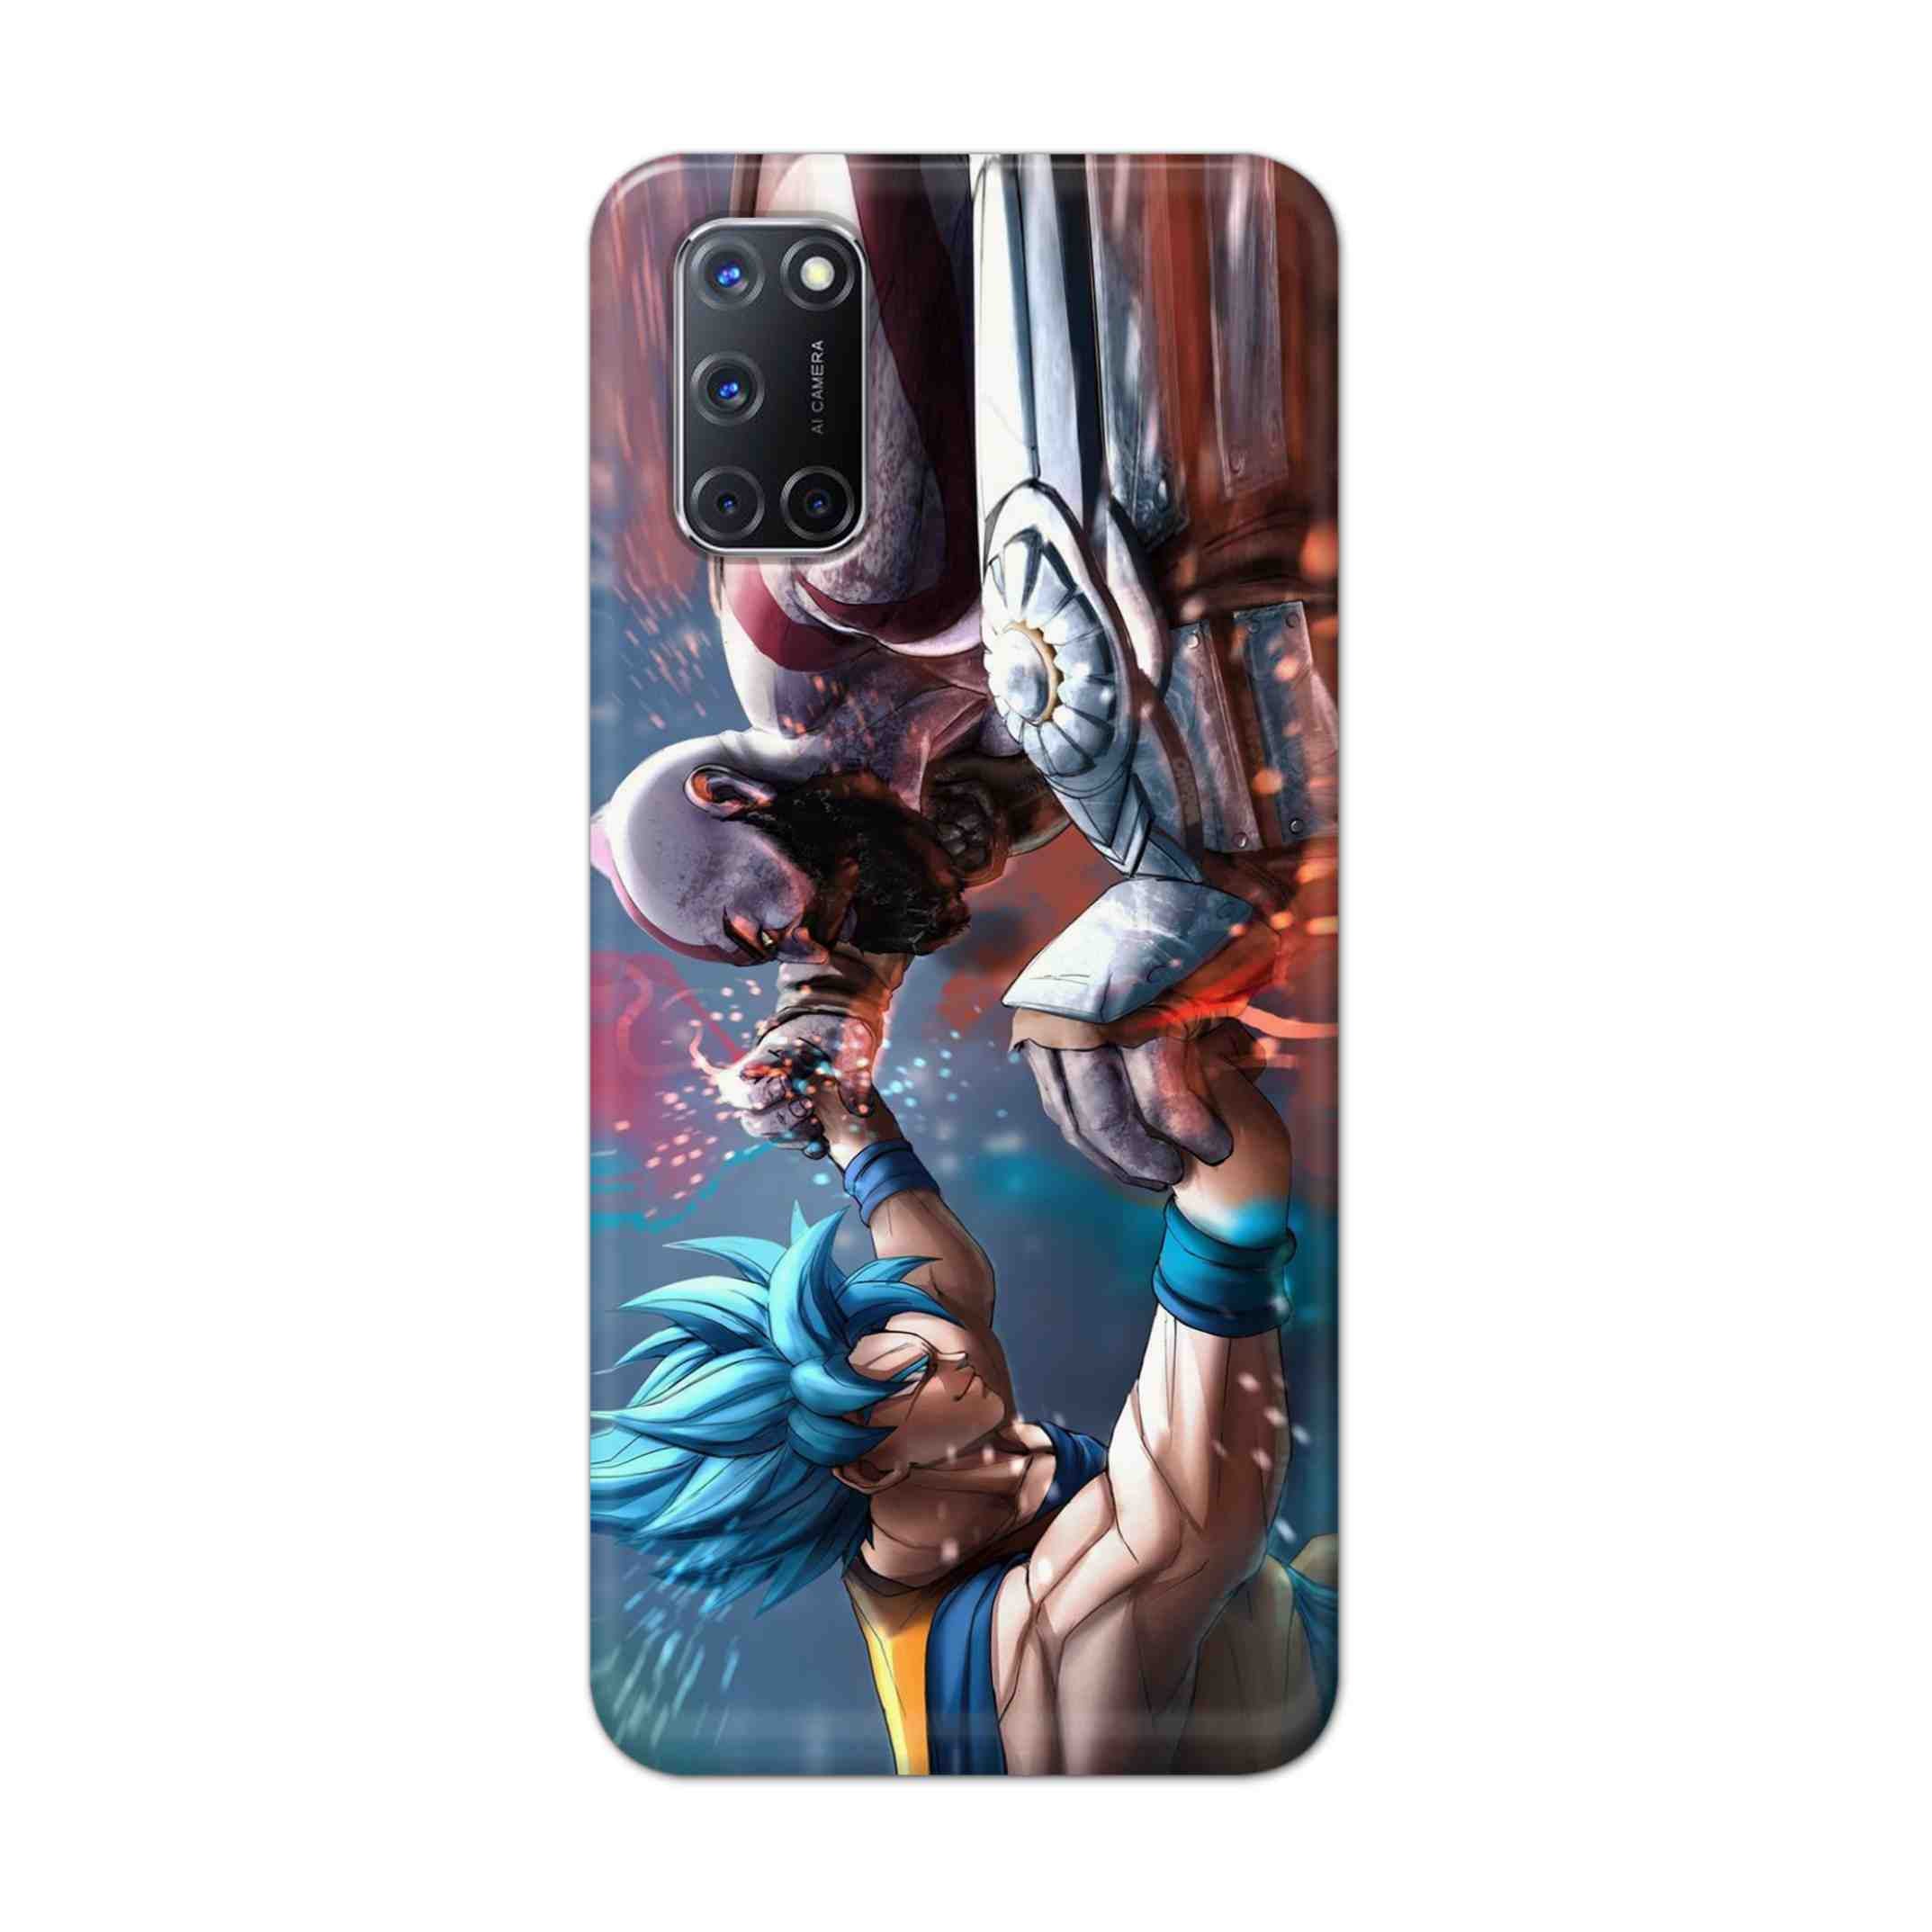 Buy Goku Vs Kratos Hard Back Mobile Phone Case Cover For Oppo A52 Online